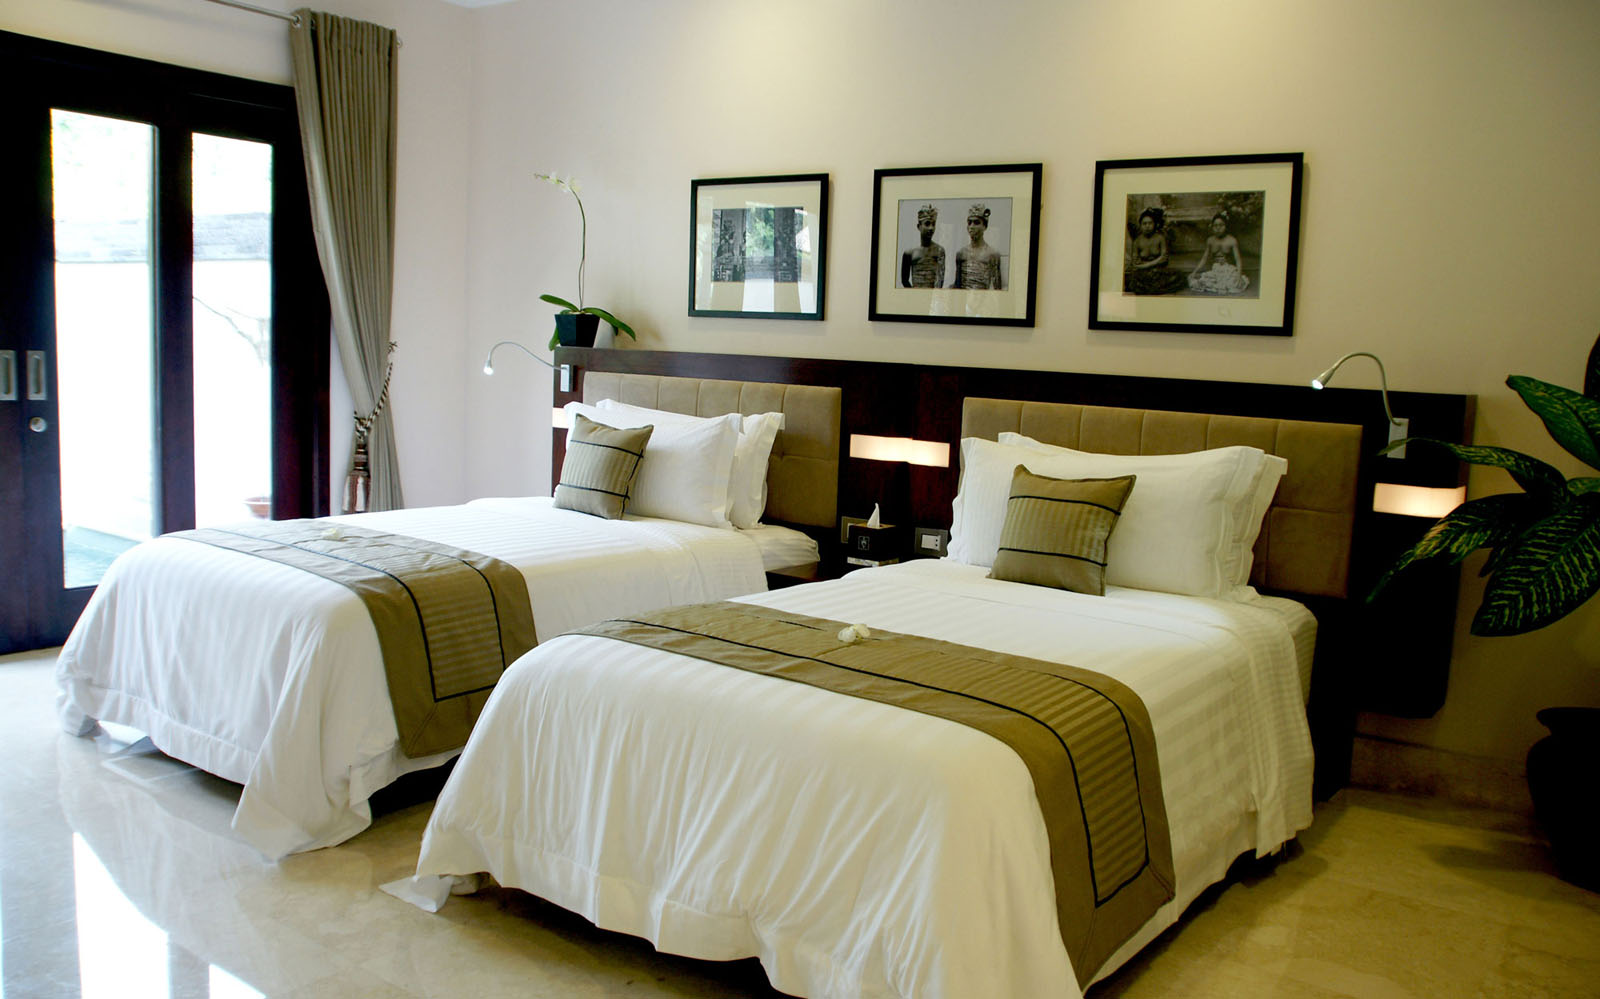 Romantic Viceroy Bali Resort In Ubud | iDesignArch | Interior Design